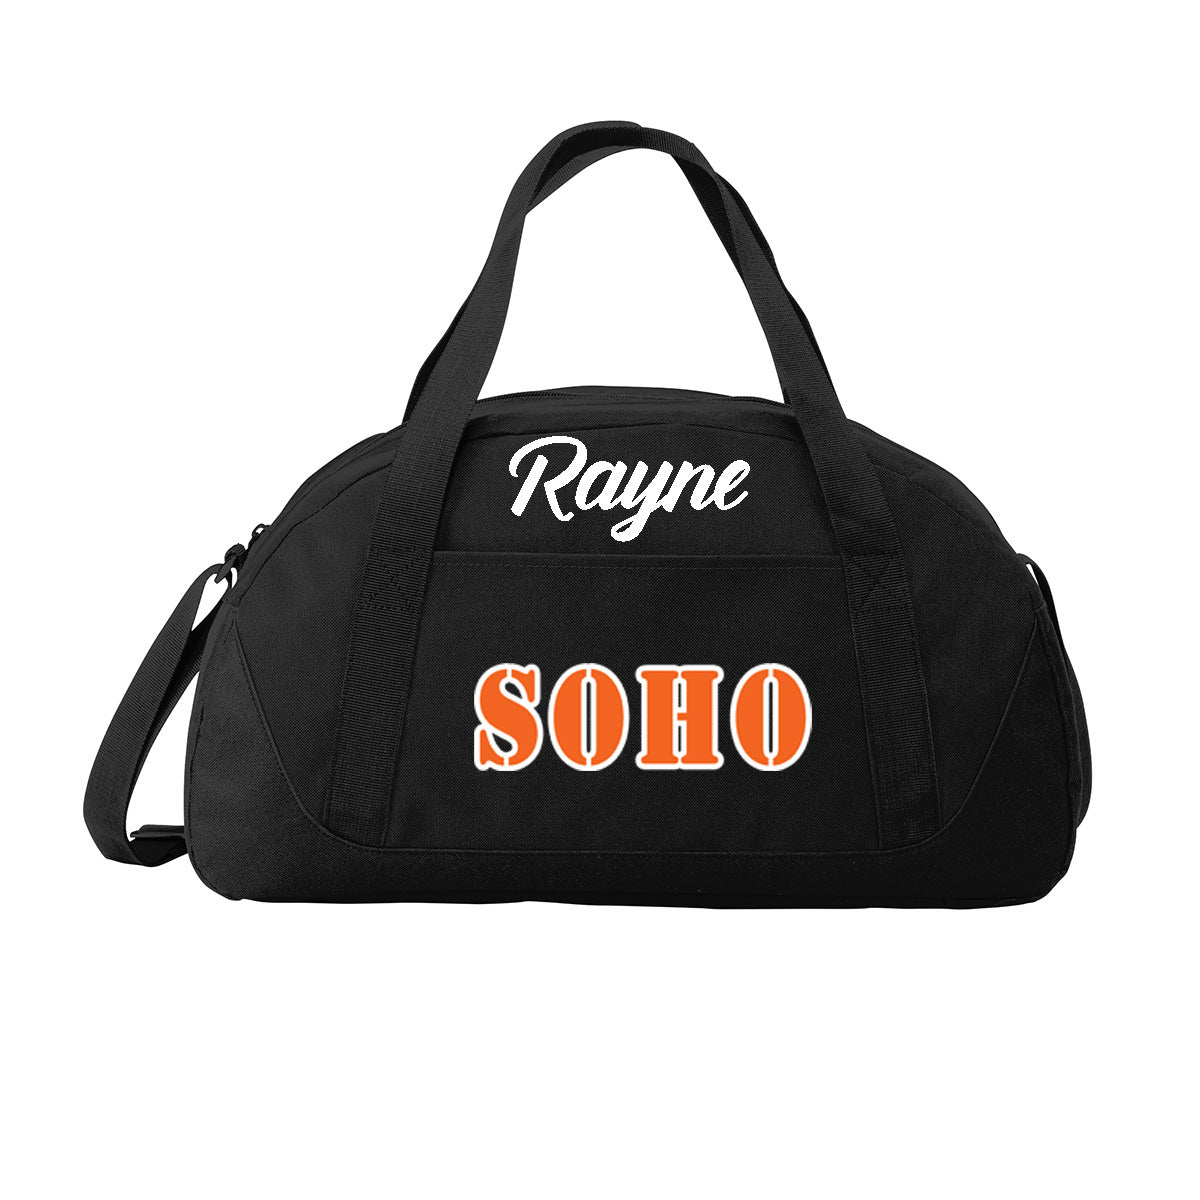 SOHO - Small Dome Duffle Bag with SOHO (Stencil Font) - Black (BG818) - Southern Grace Creations